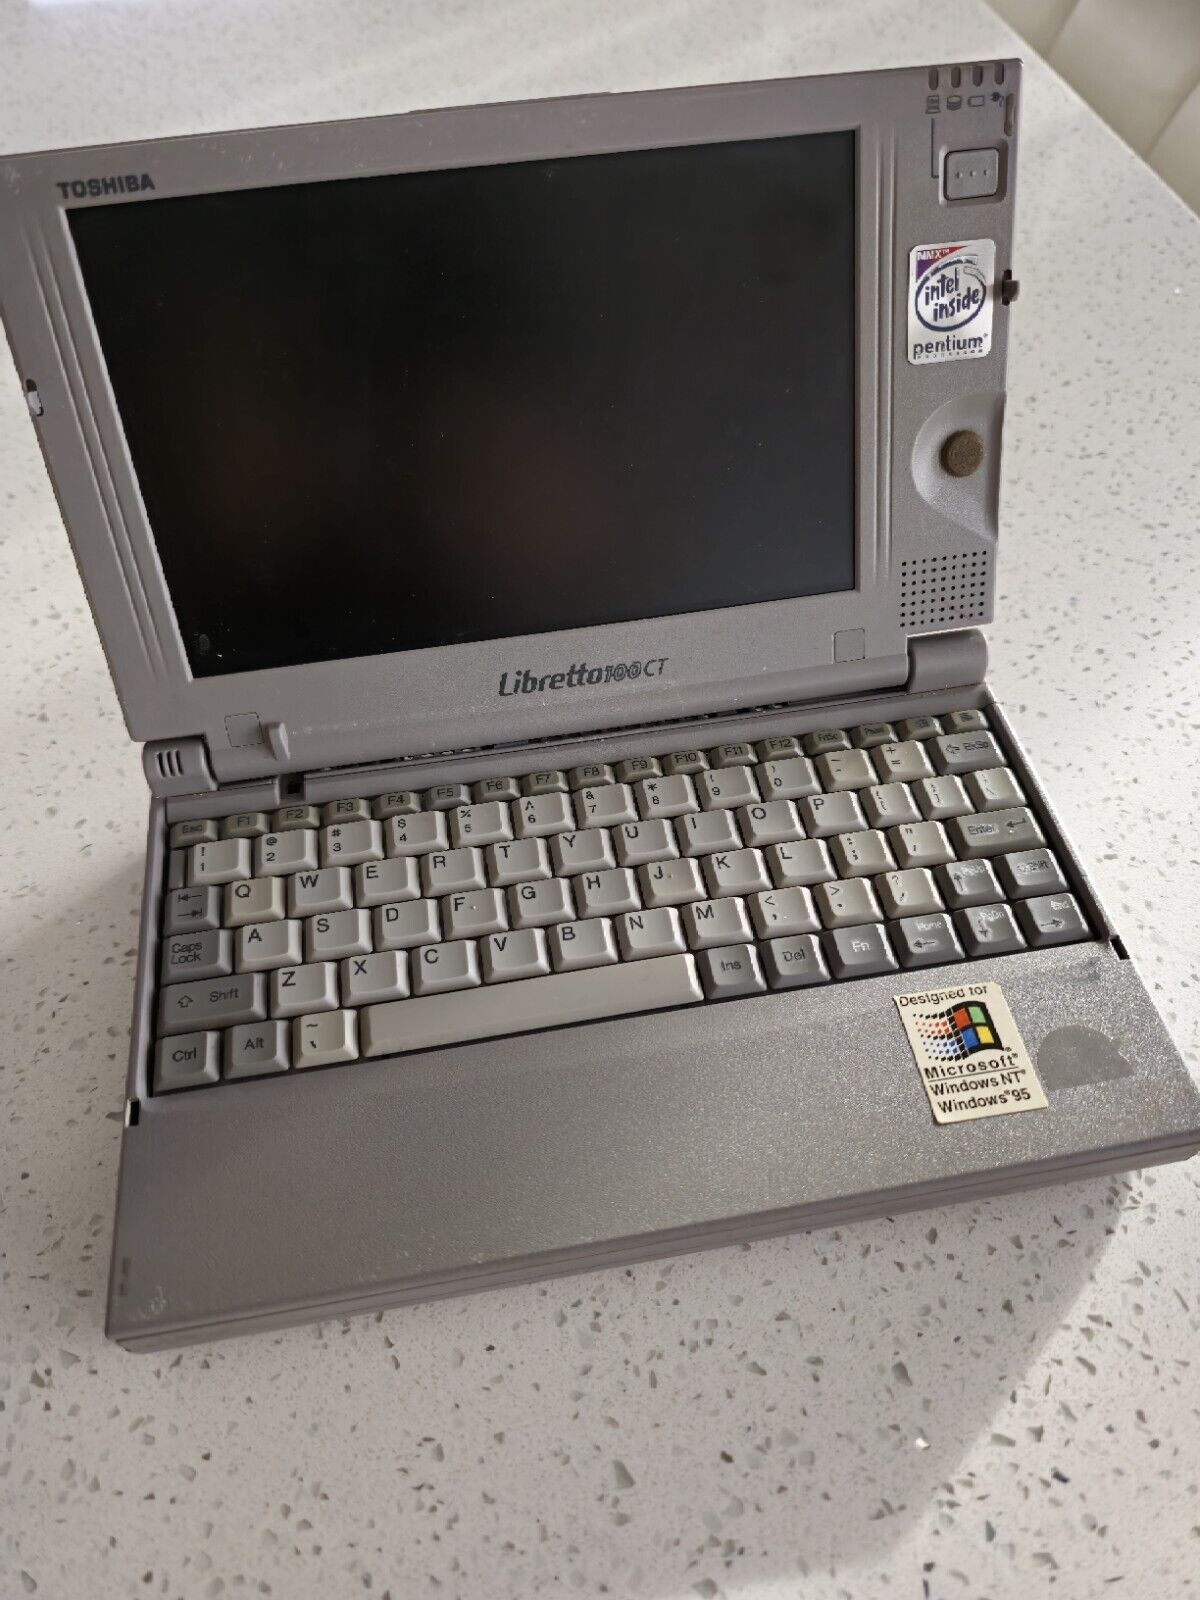 Toshiba Libretto 100CT 1996 Laptop Vintage Collectible - Read Discription 